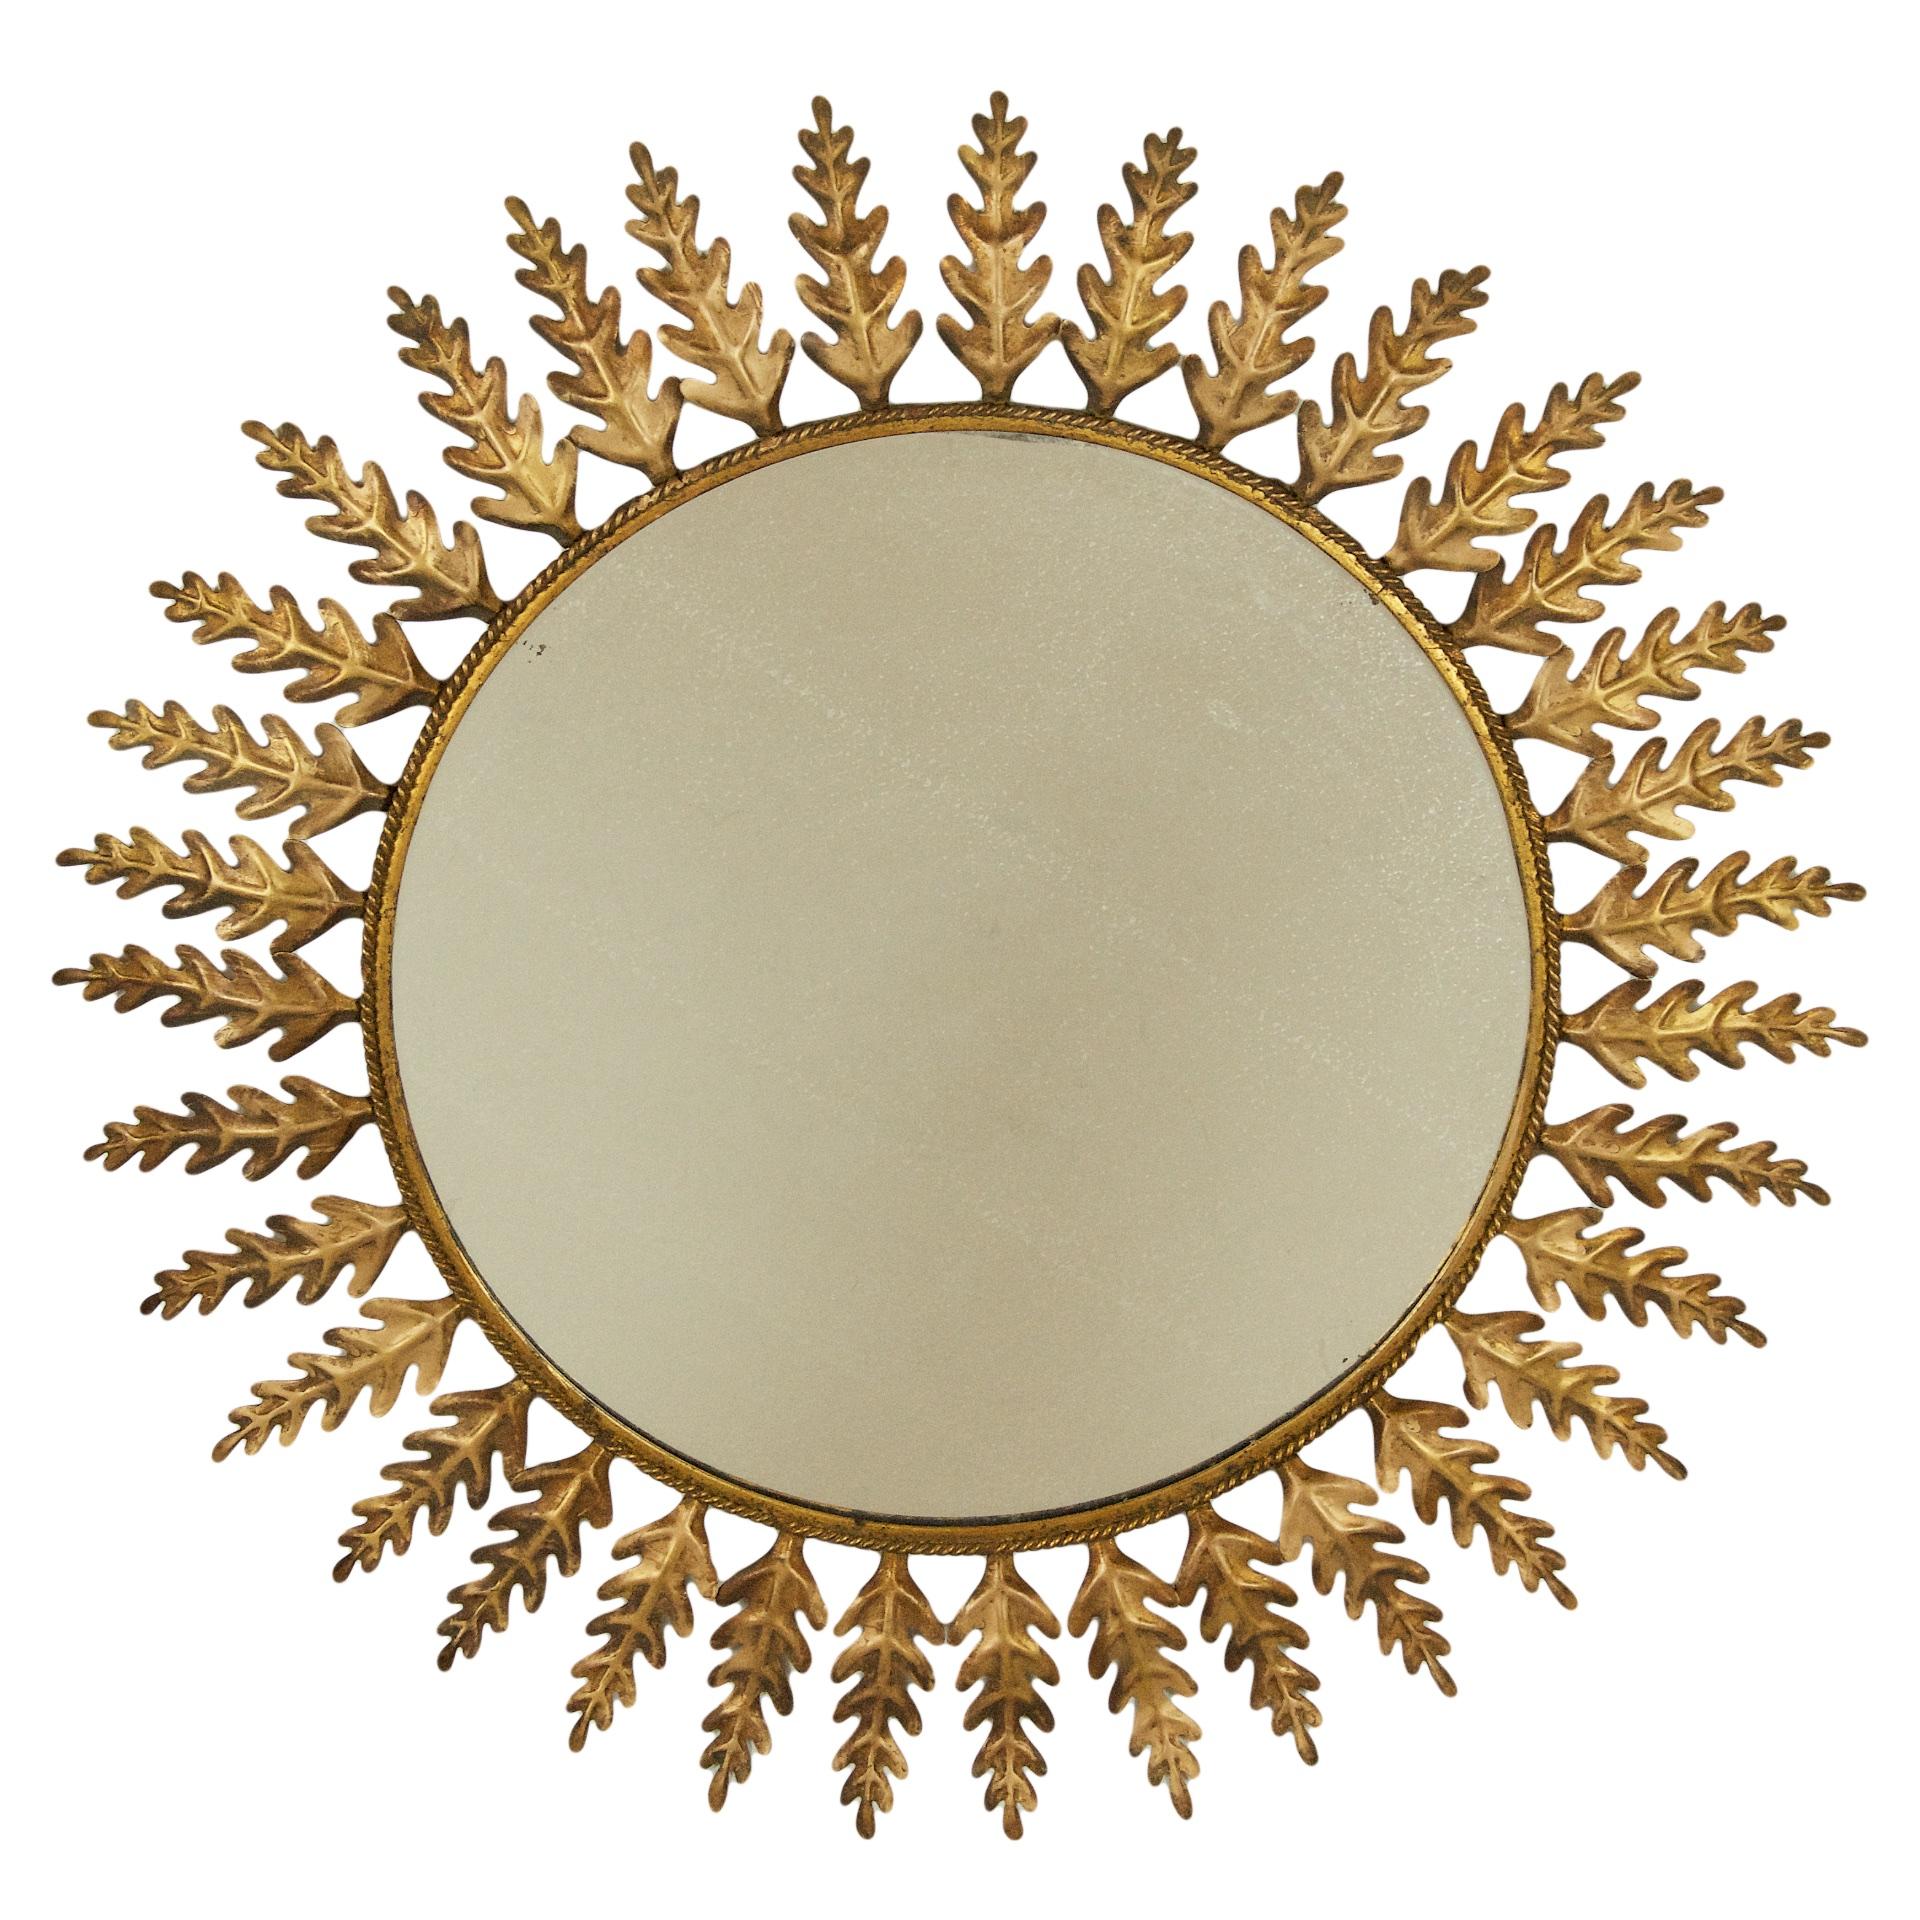 Huge Metal Round Leafed Sunburst Mirror For Sale